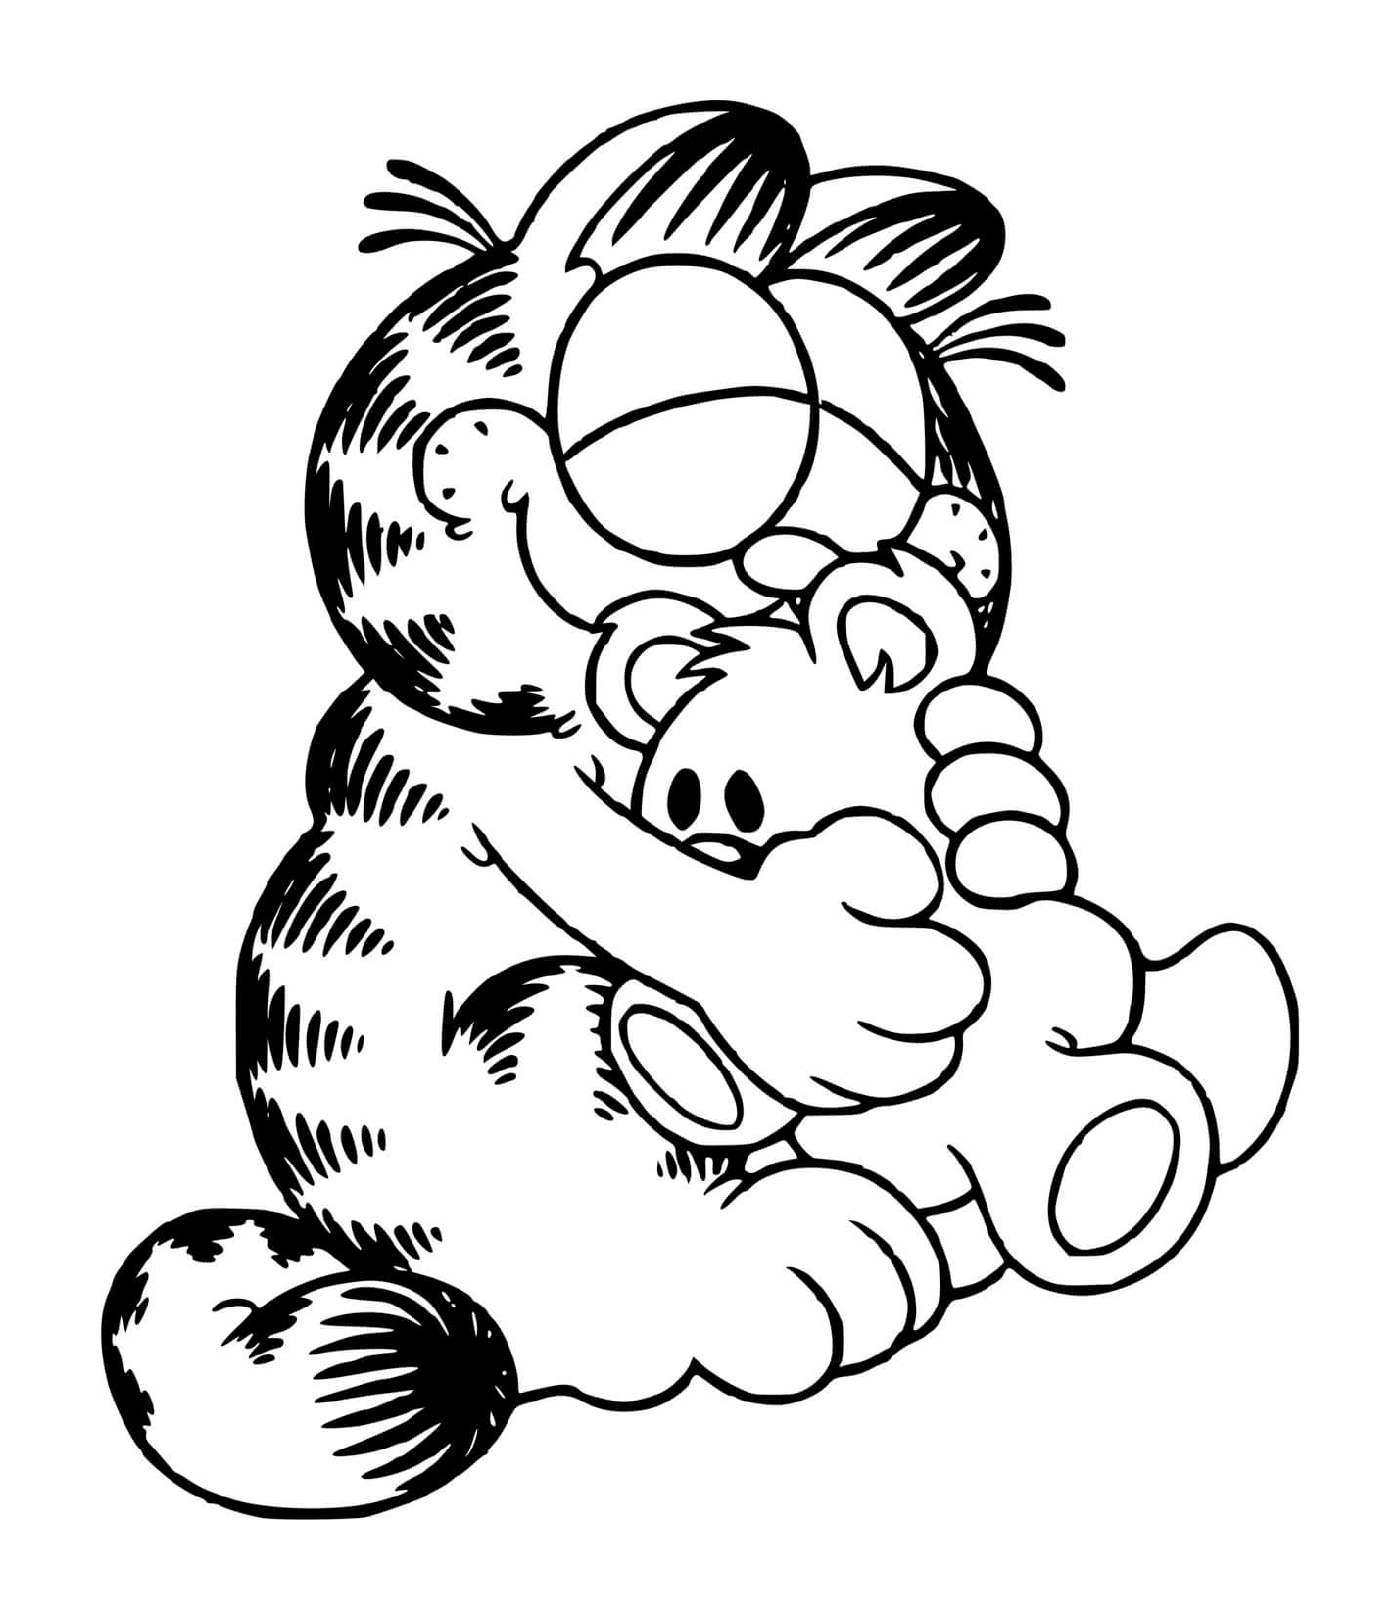  Garfield abraza su felpa 